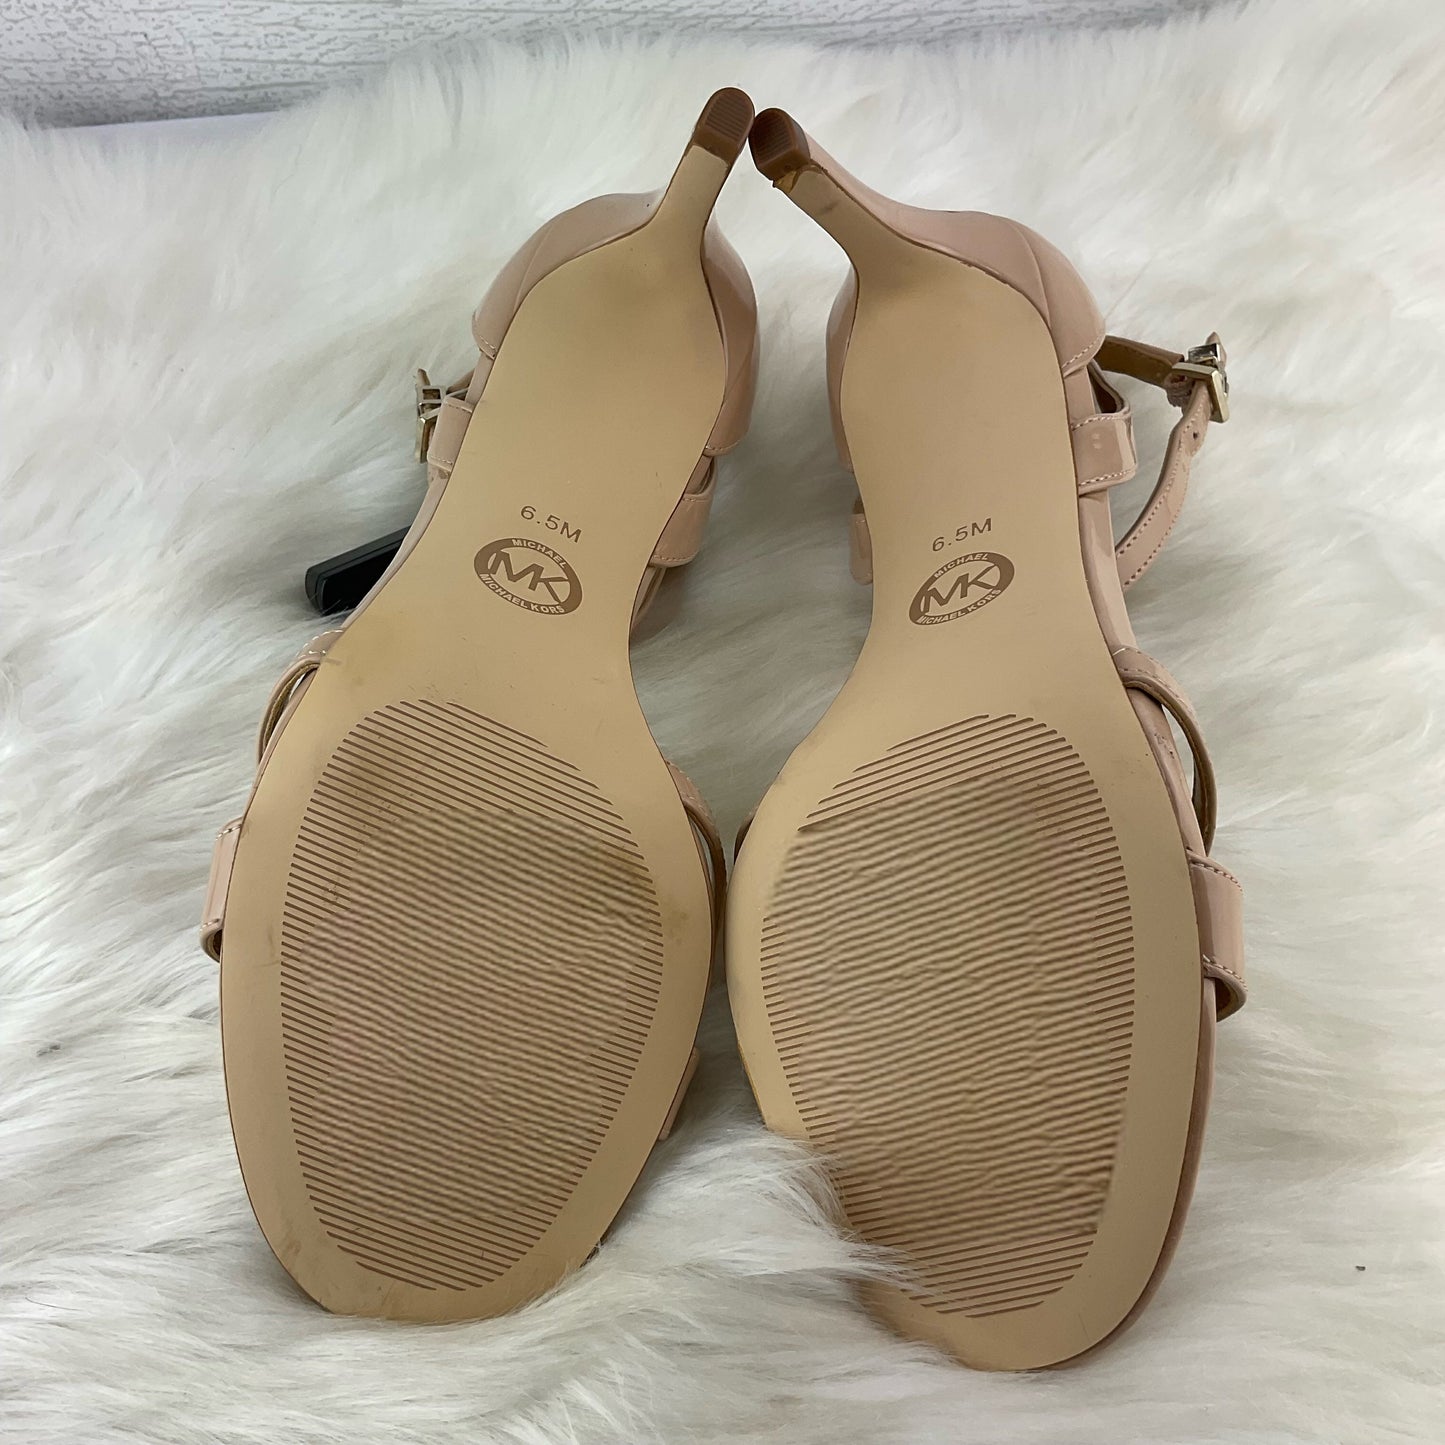 Tan Shoes Heels Stiletto Michael Kors, Size 6.5